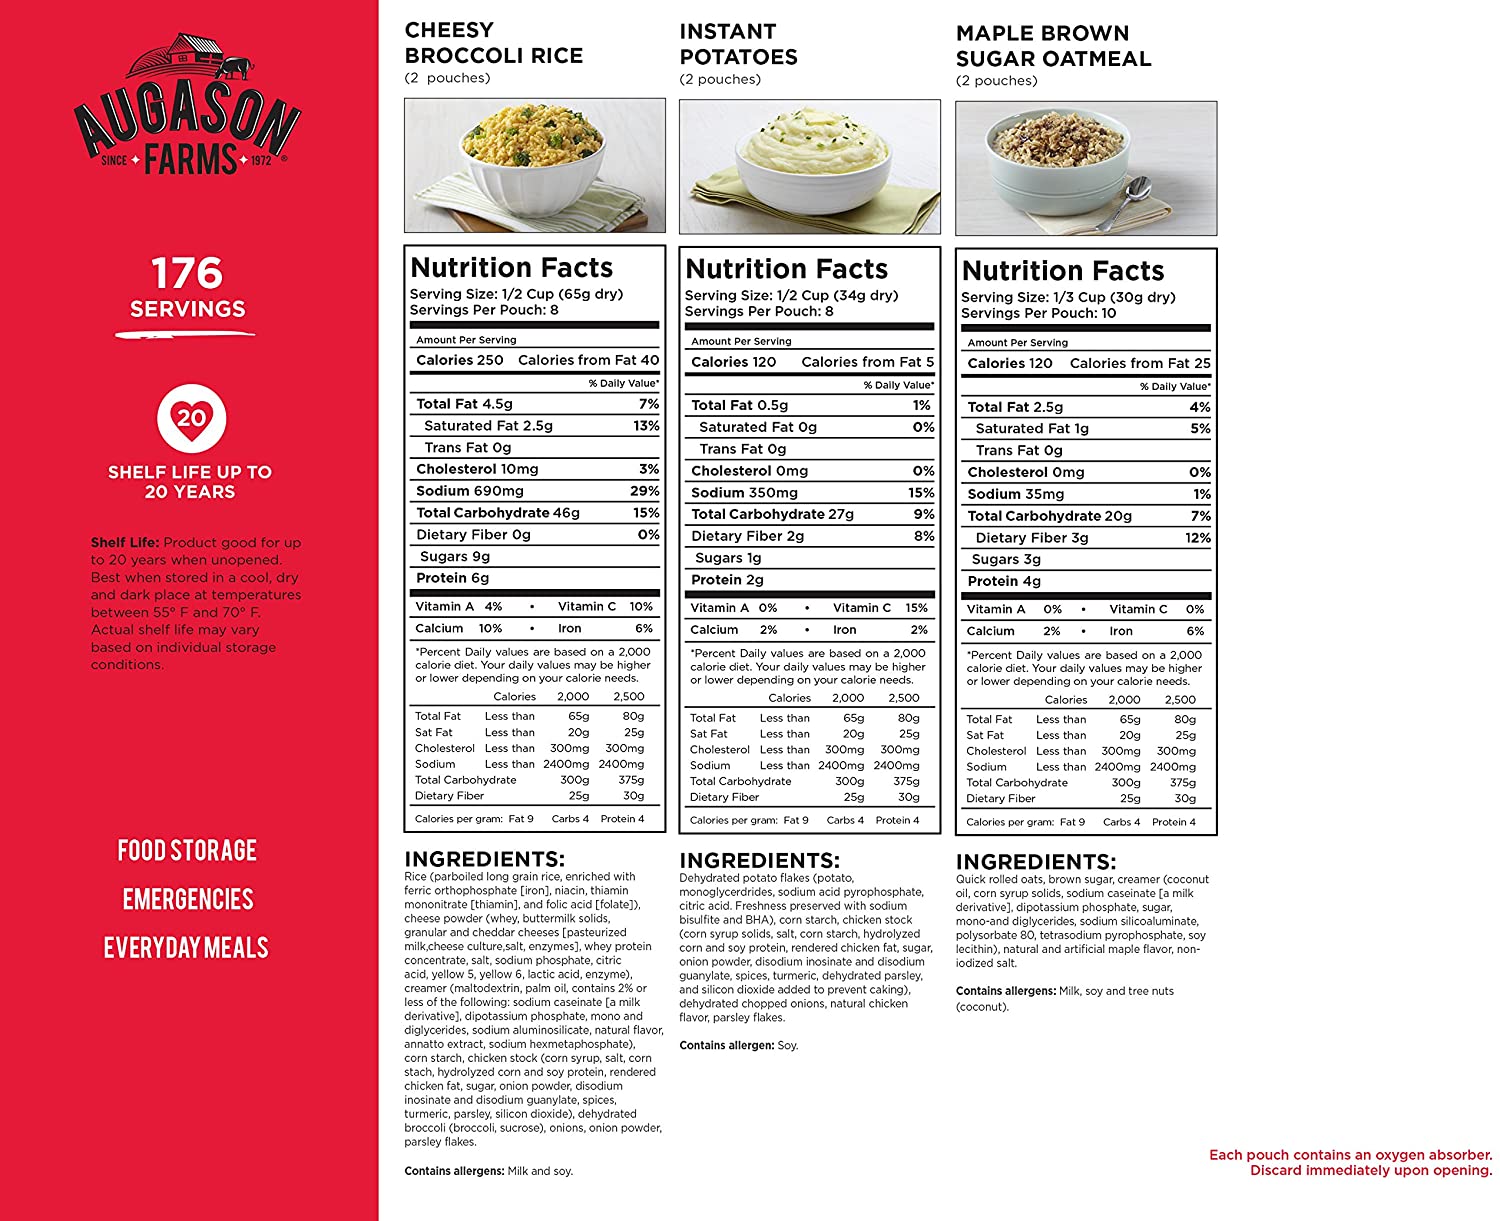 Audrey's granola - nutrition facts + Augason Farms Emergency Food Storage Kit.